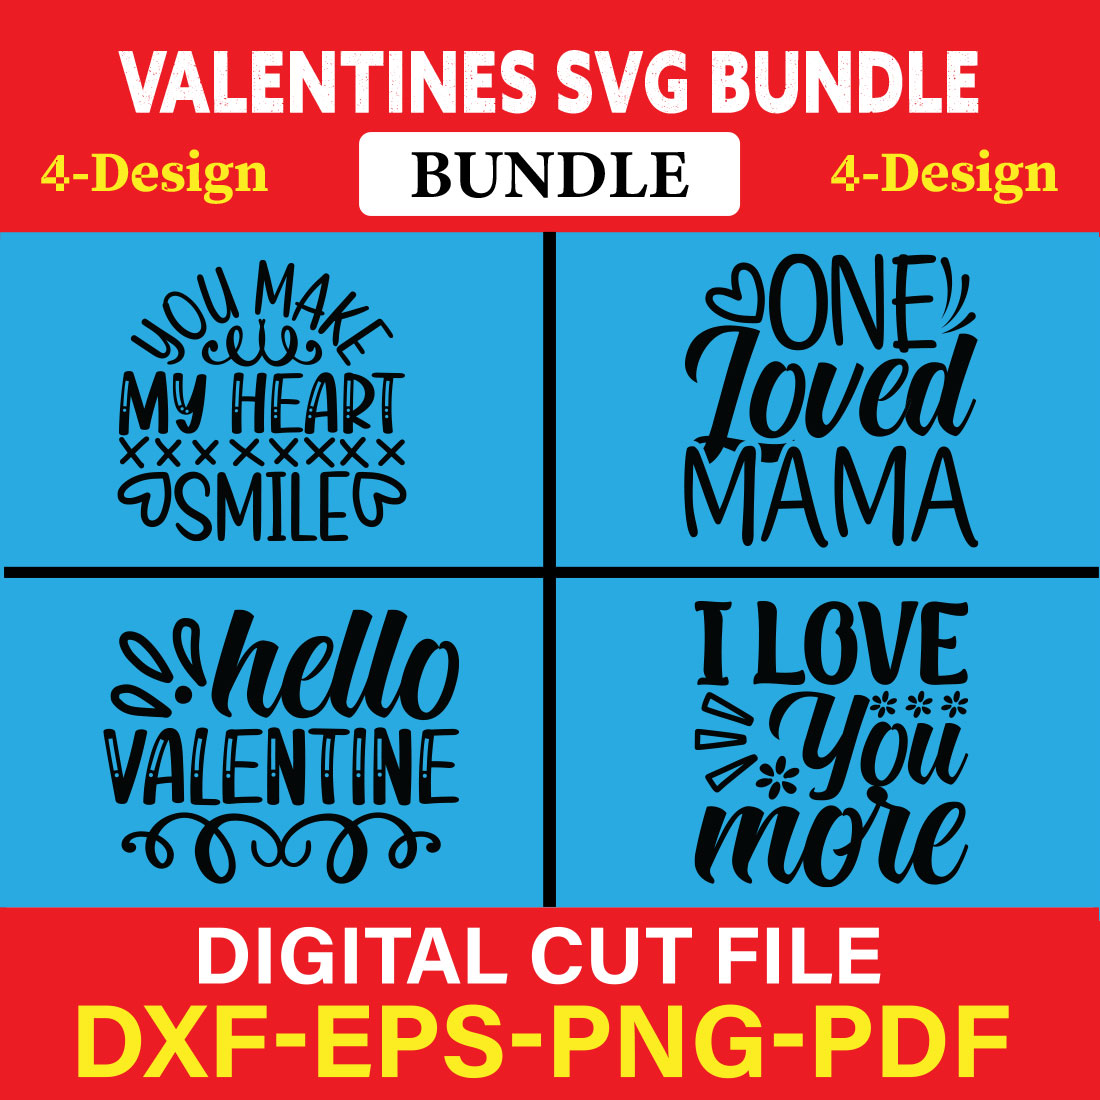 Valentines T-shirt Design Bundle Vol-40 cover image.